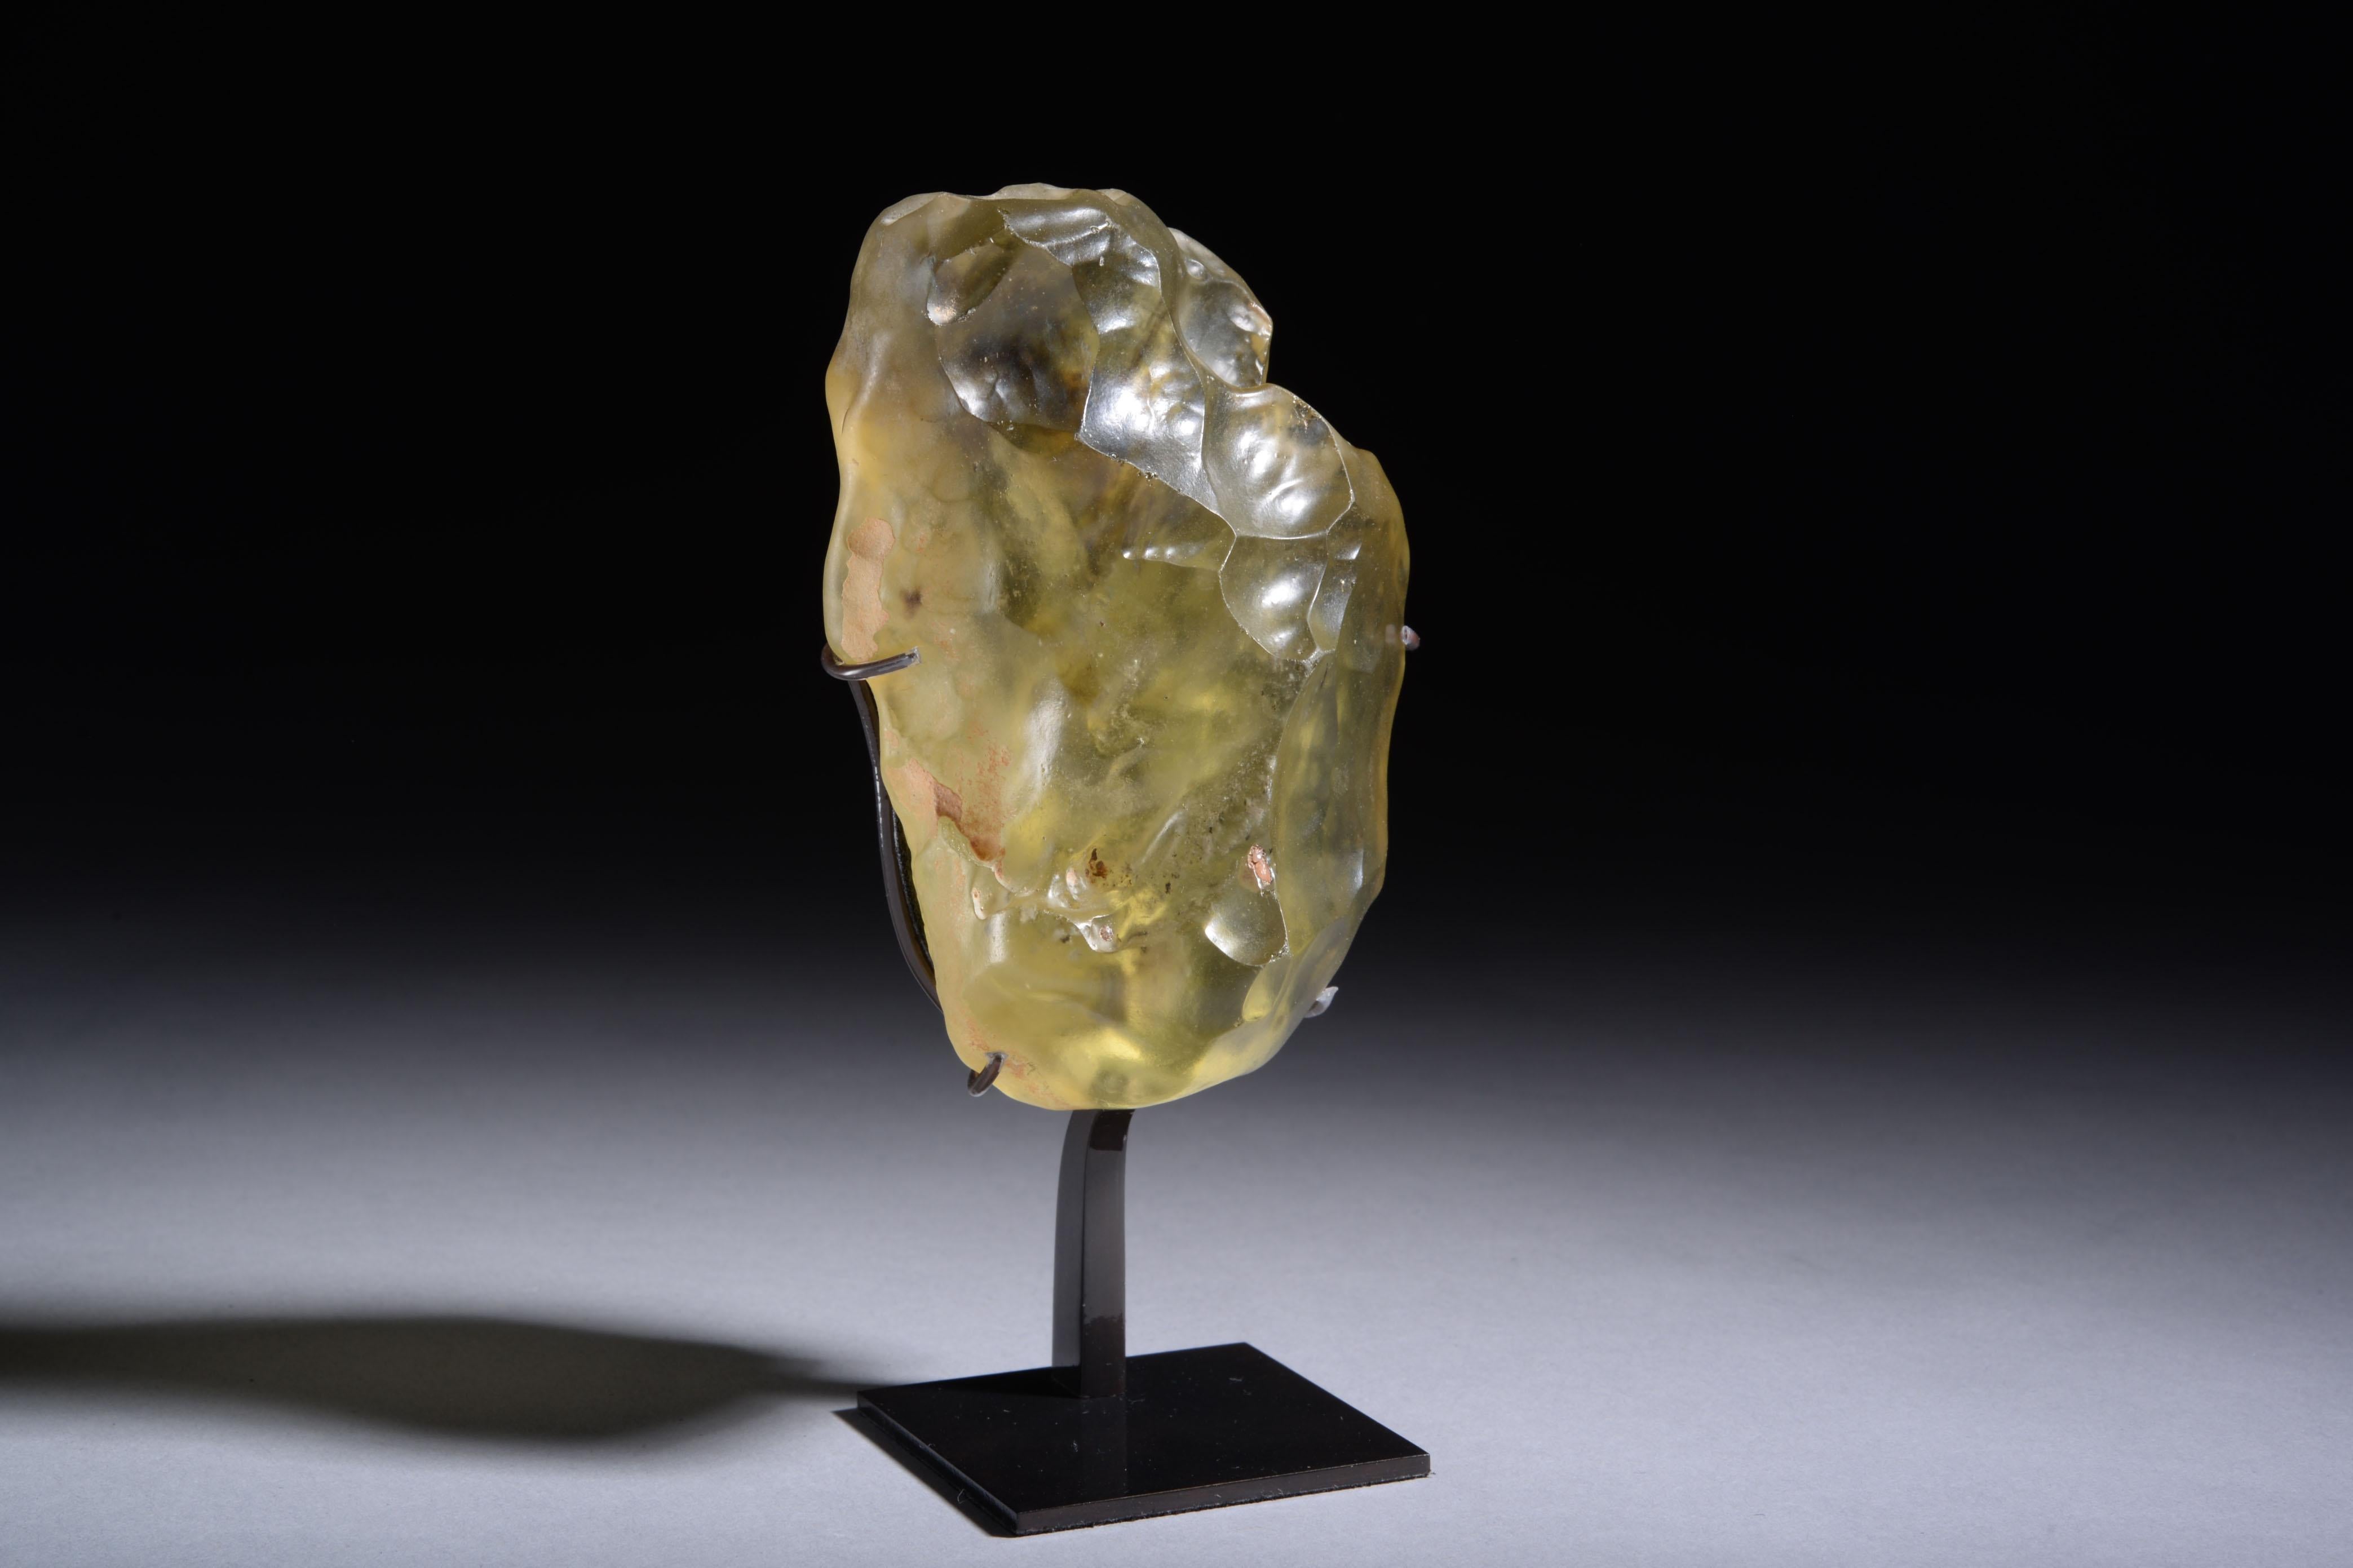 Meteorite Impact Desert Glass - Sculpture by Unknown